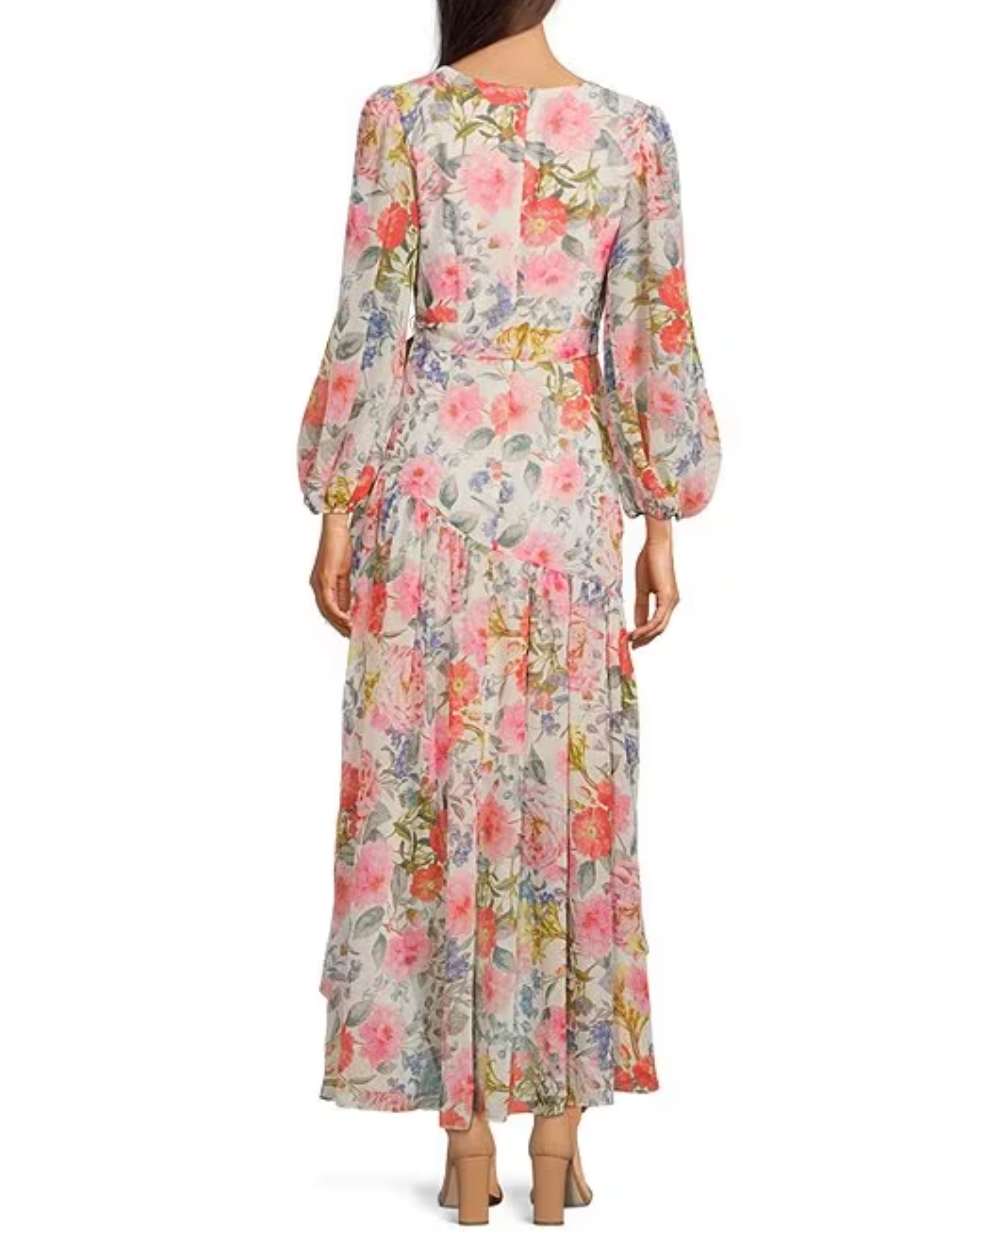 Chiffon Ruffle V-Neck Long Blouson Sleeve Tie Waist High-Low Faux Wrap Maxi Dress in Blush Floral - The French Shoppe